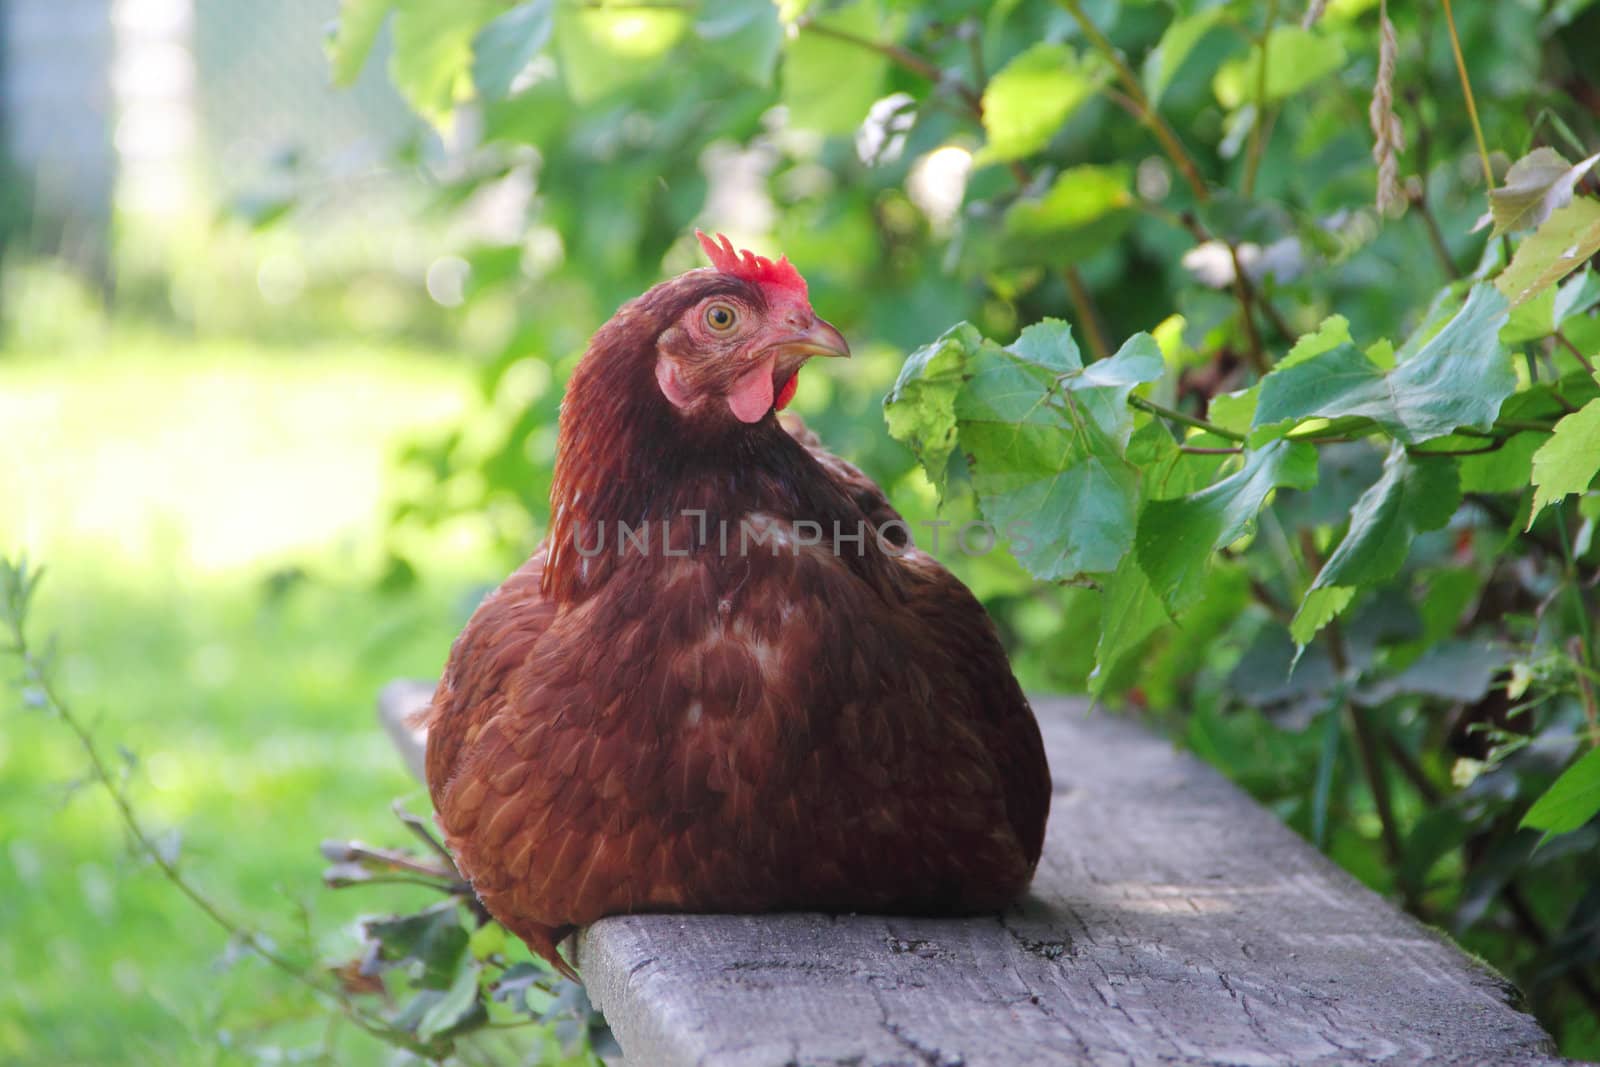 Portarait of a hen sitting on wooden bench near tree